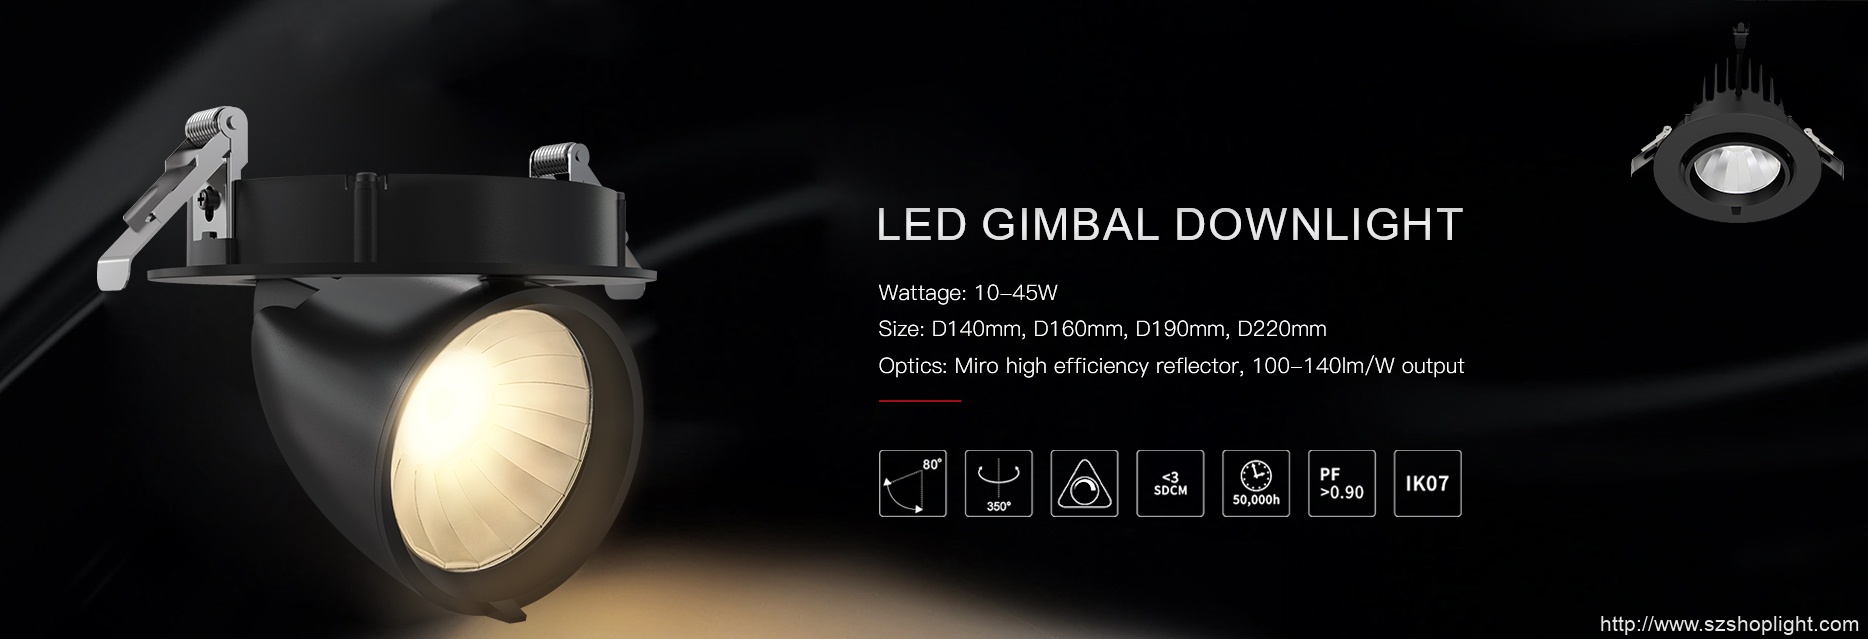 LED-Gimbal-downlight